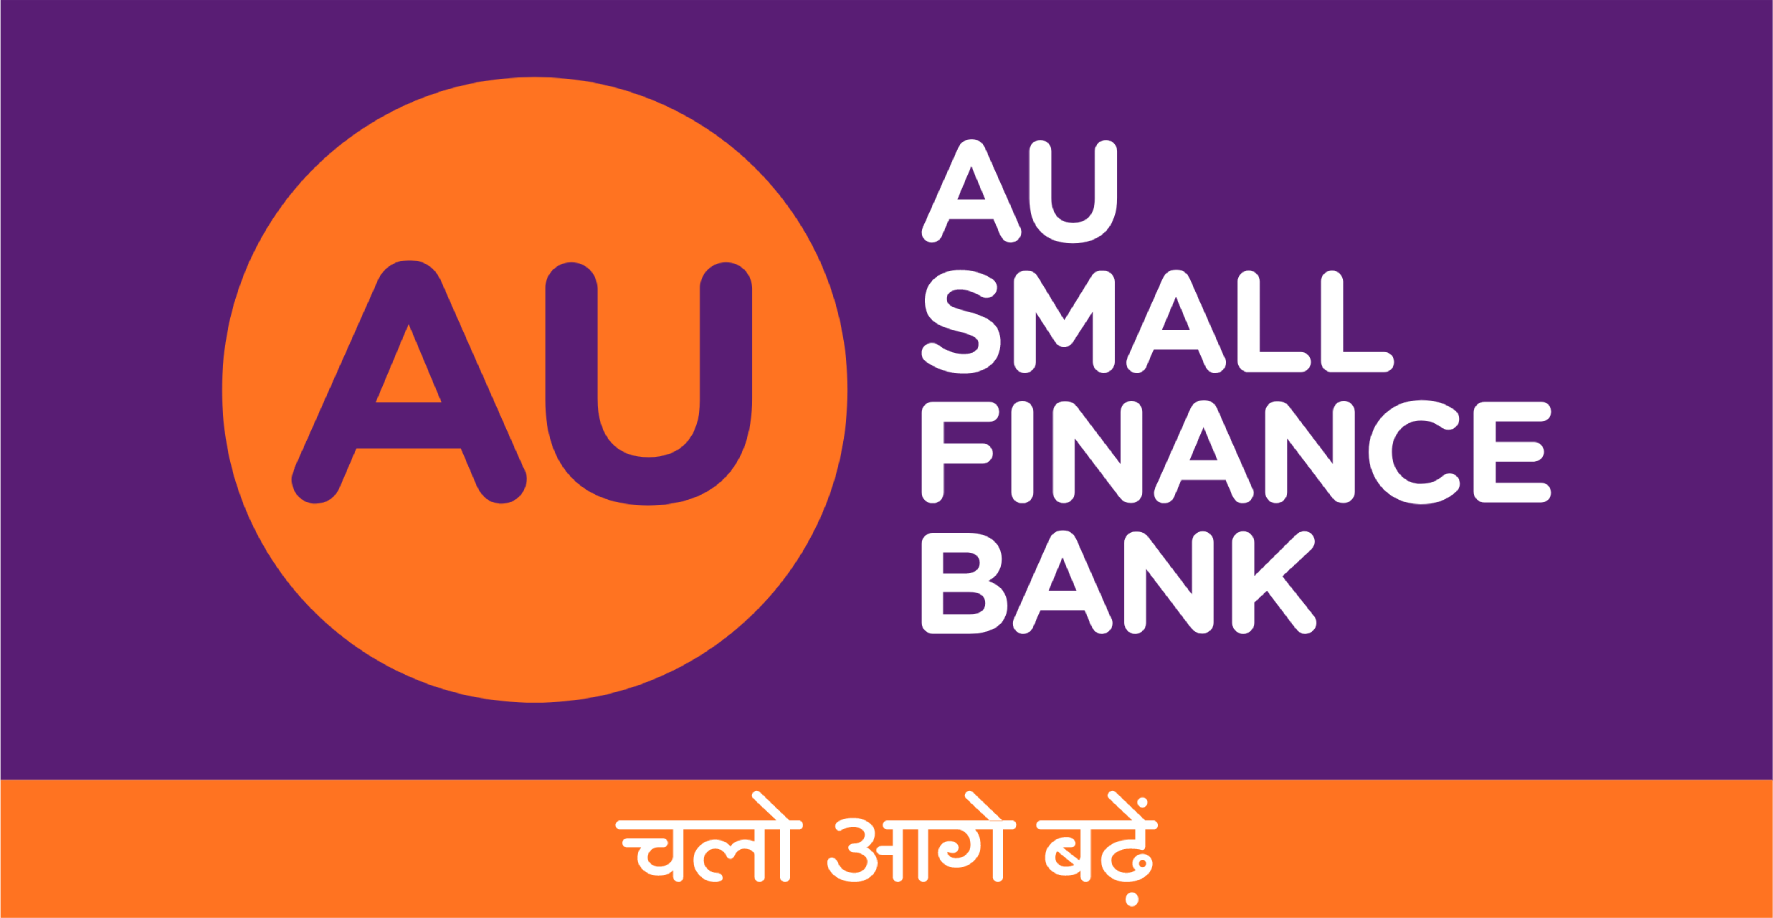 AU Small Finance Bank logo large (transparent PNG)